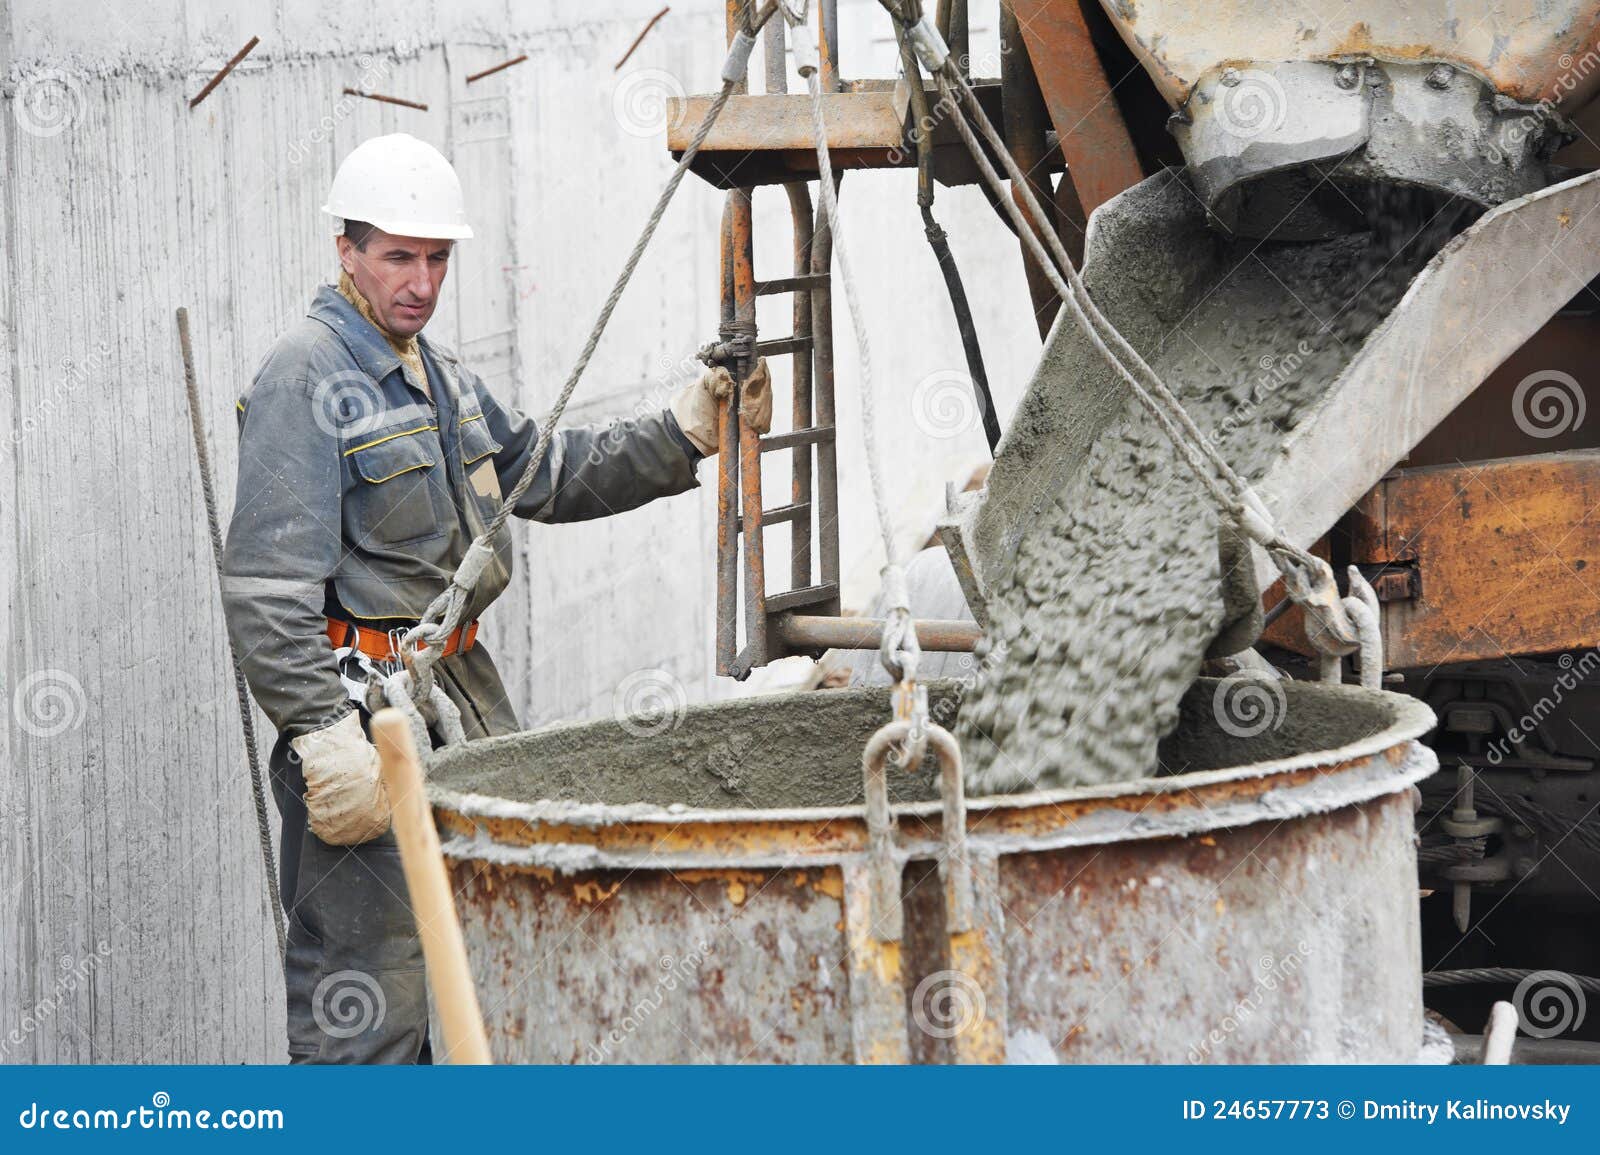 Builder Worker Pouring Concrete Into Barrel Stock Photos - Image: 24657773